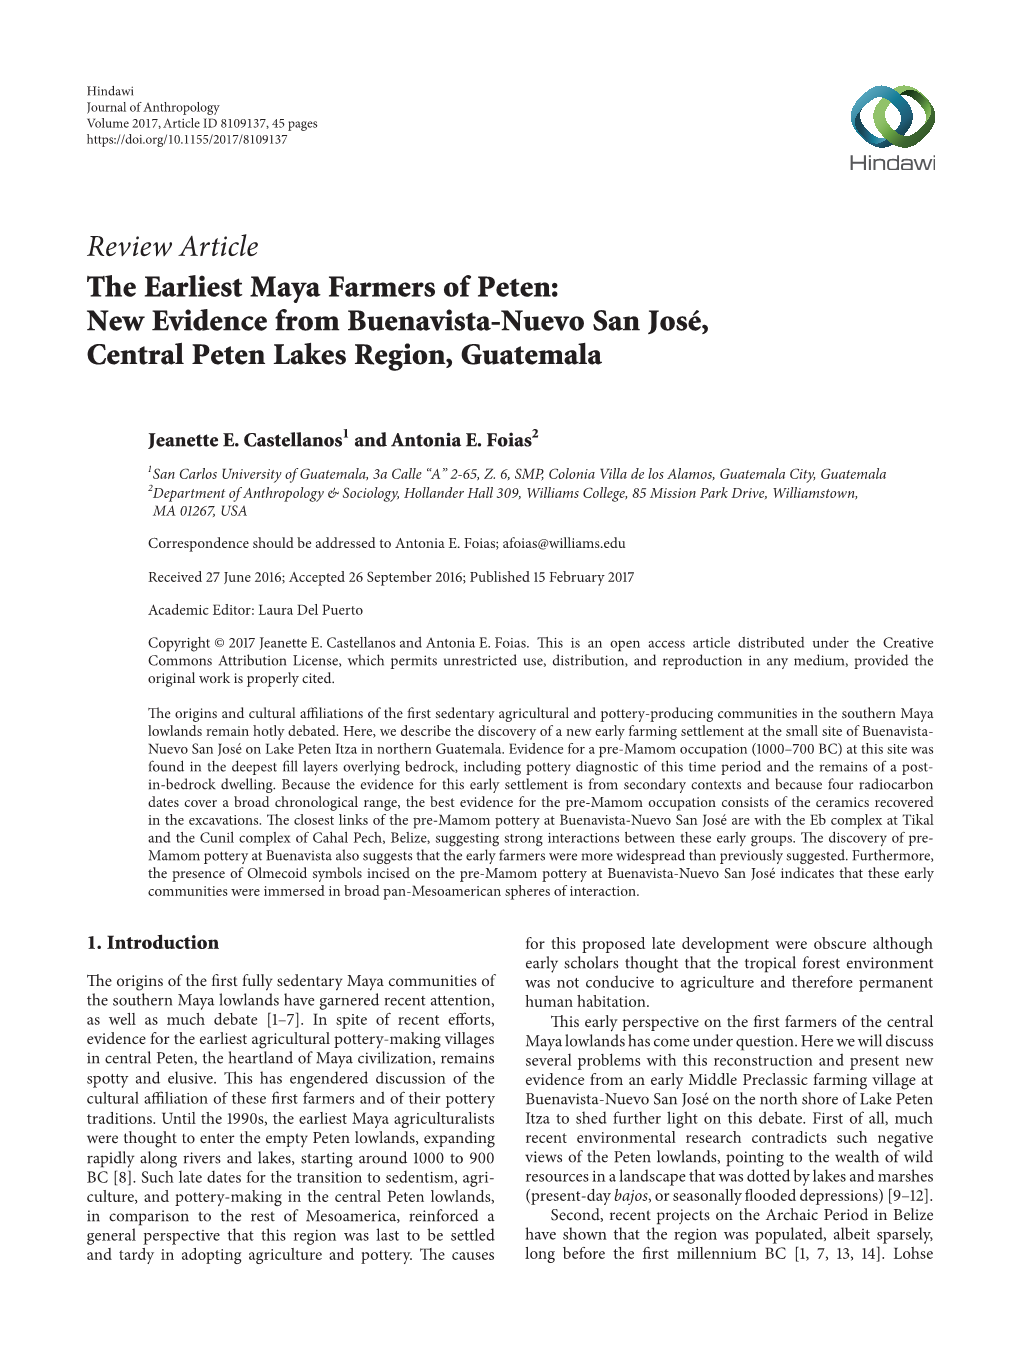 Review Article the Earliest Maya Farmers of Peten: New Evidence from Buenavista-Nuevo San José, Central Peten Lakes Region, Guatemala